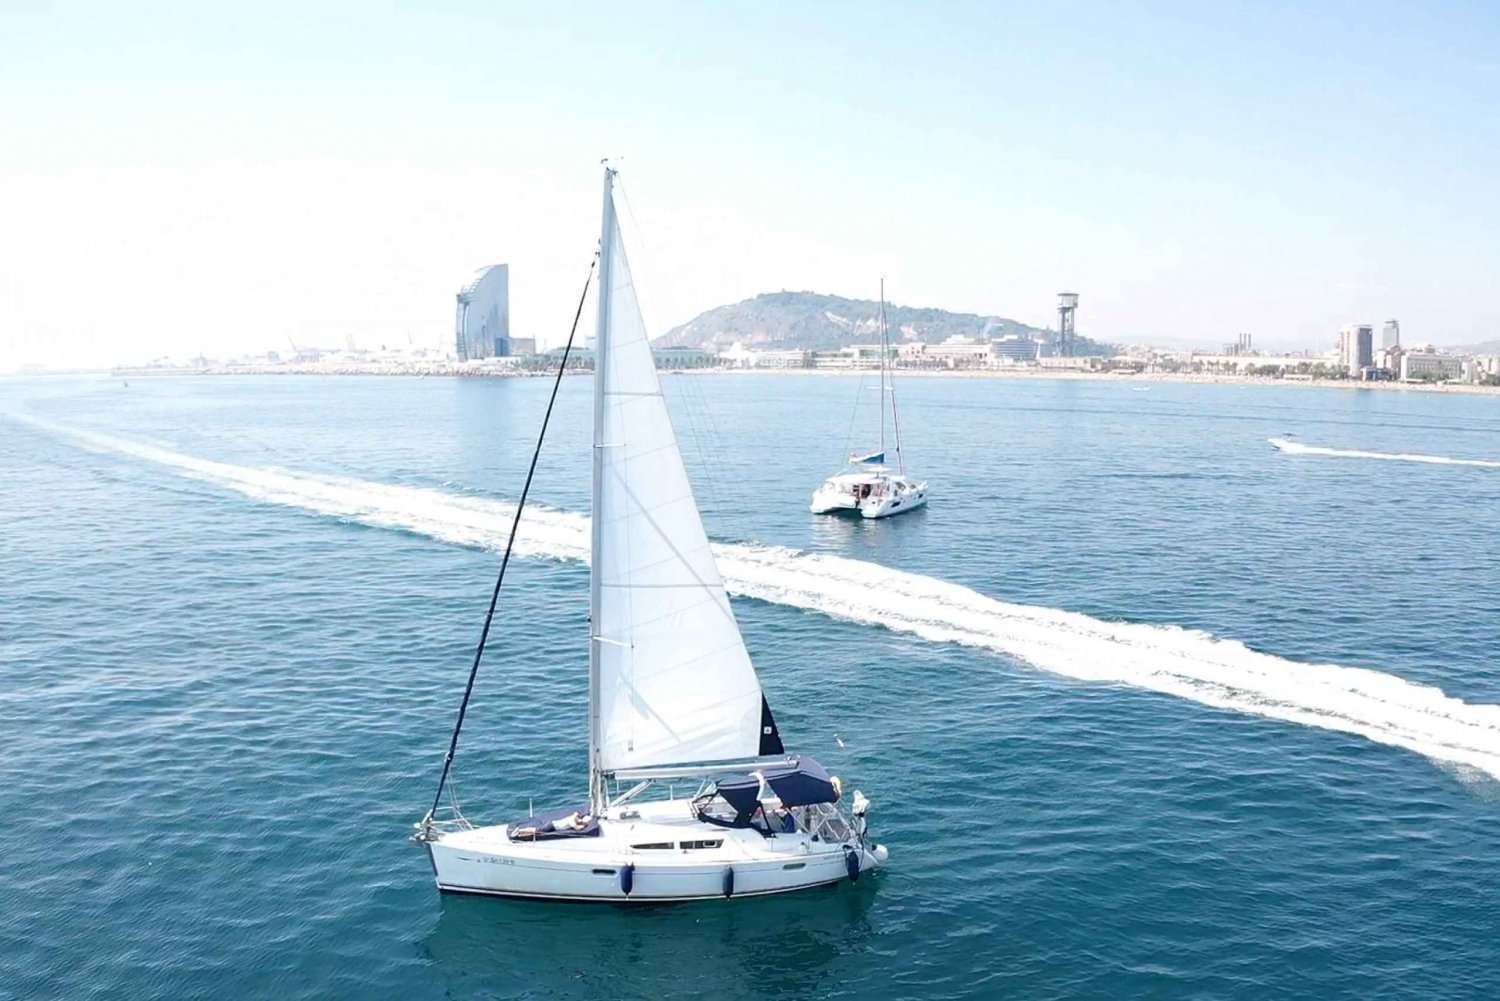 Barcelona: Boat trip with cava in amazing sailboat